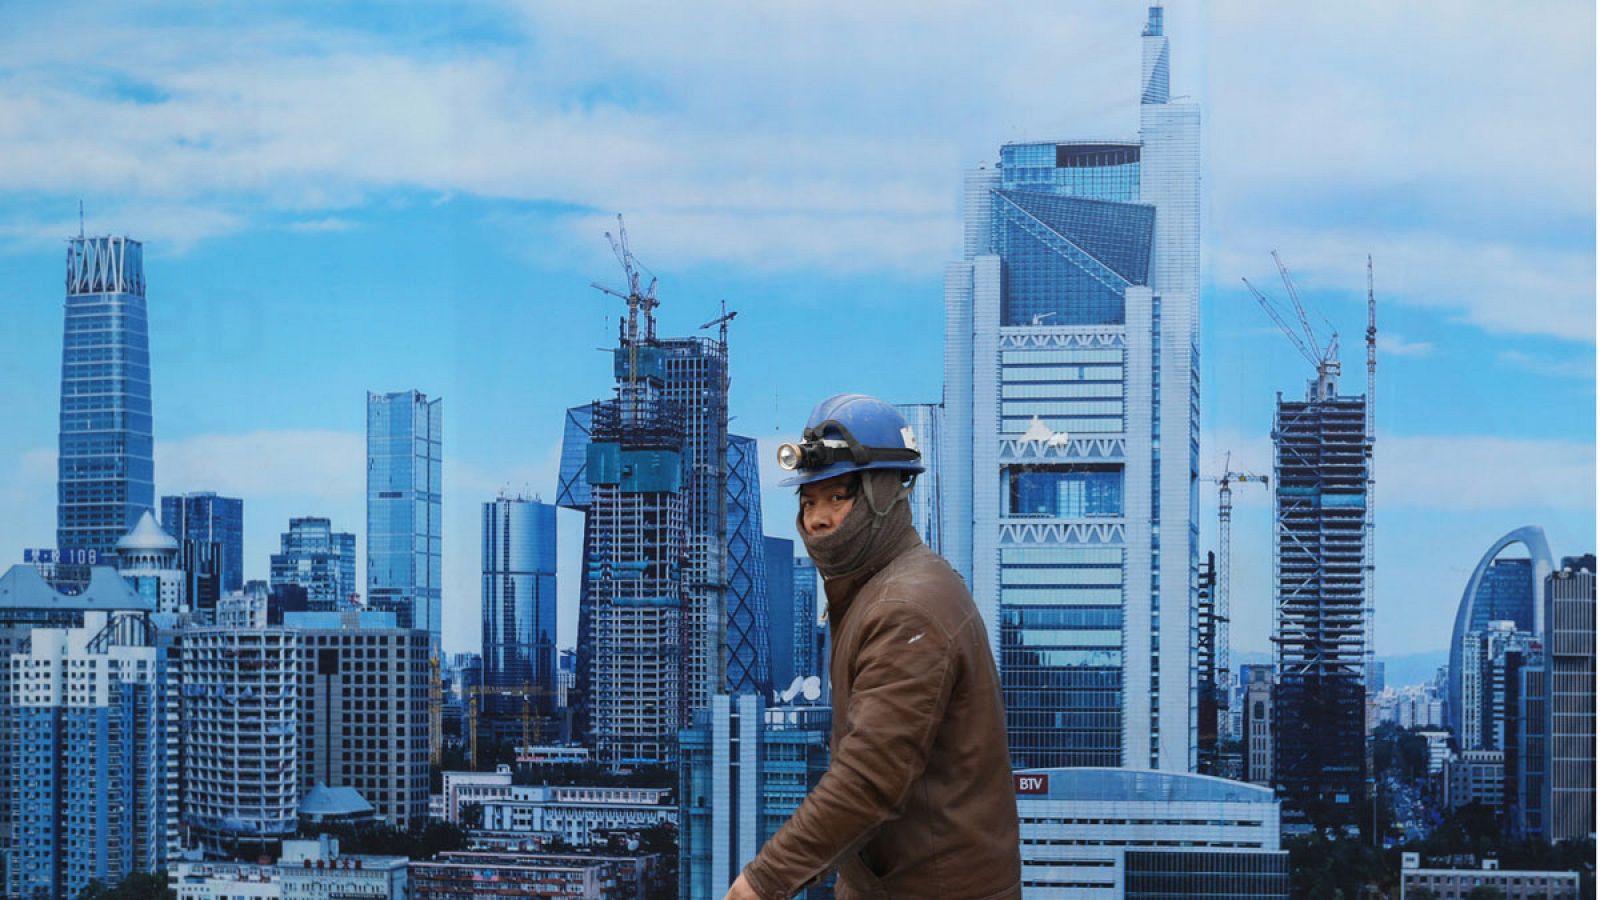 Un obrero camina junto a un cartel publicitario de una constructora en la capital de China, Pekín